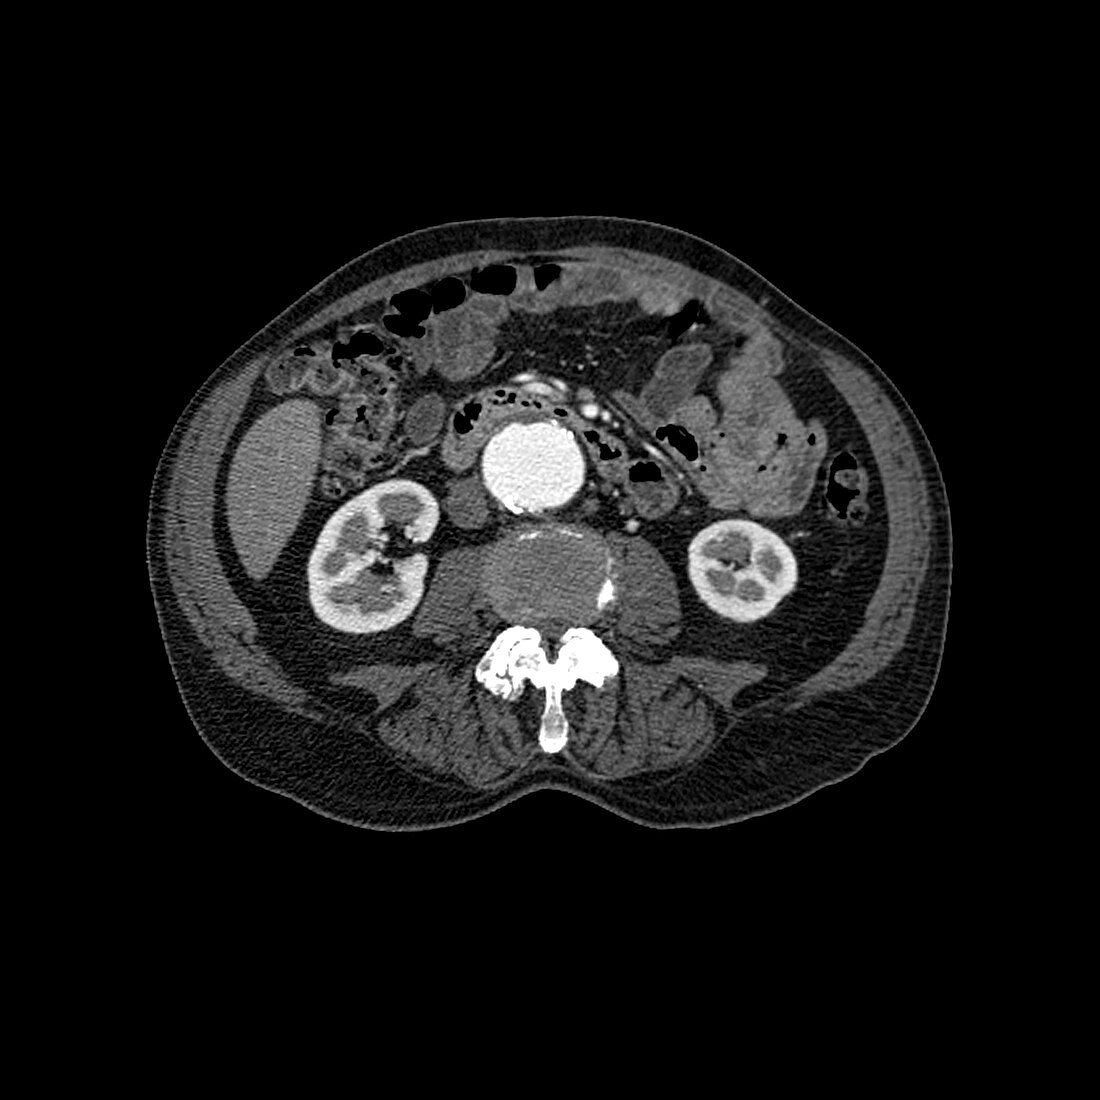 CT mid abdominal region